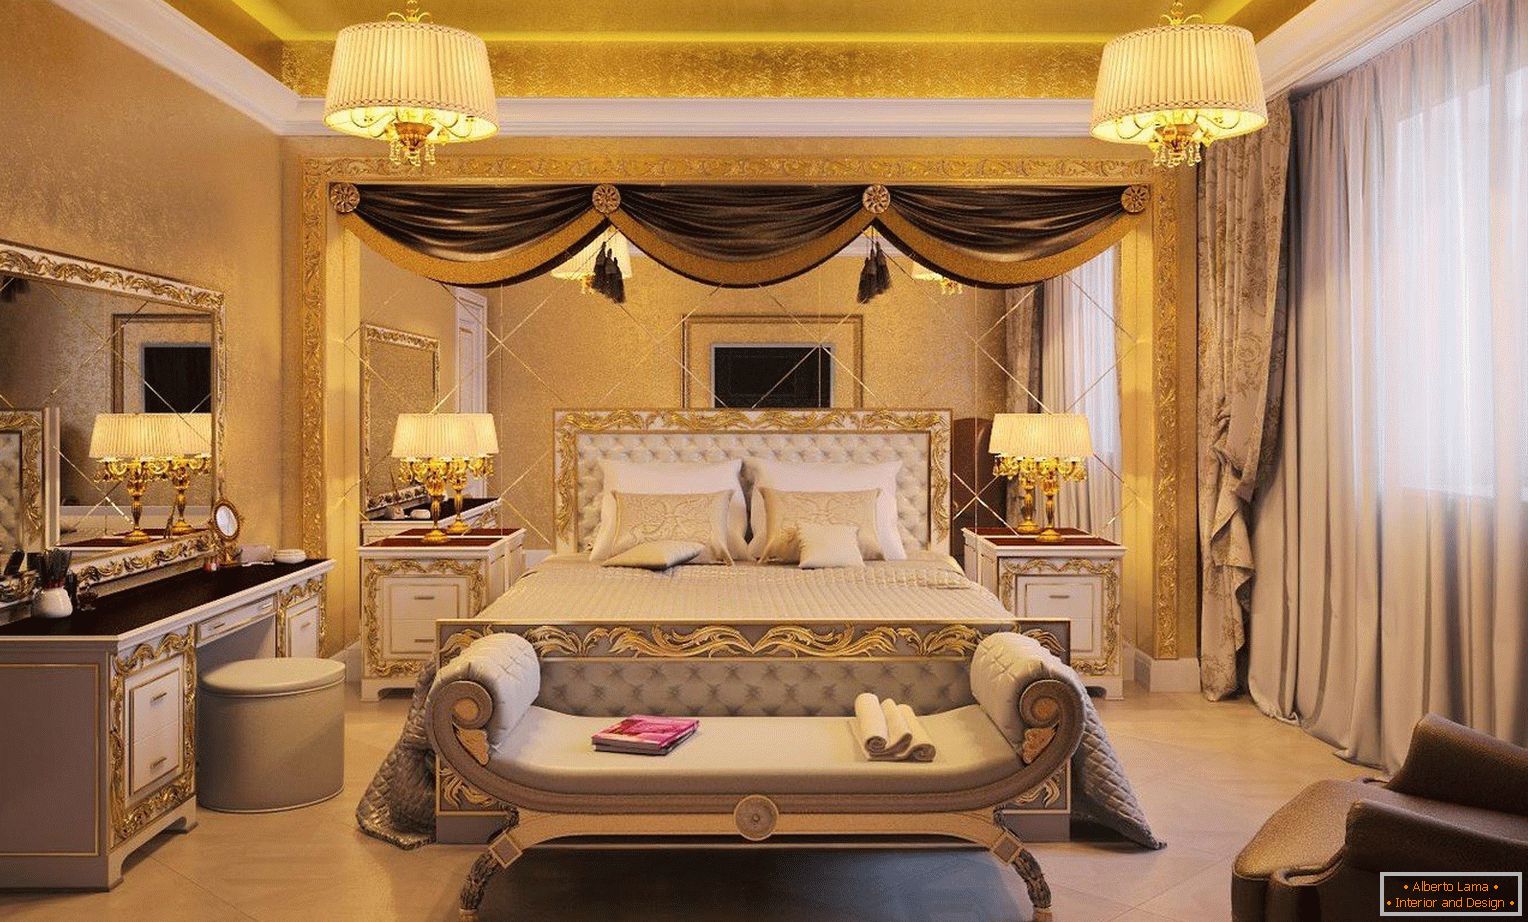 Dormitor cu mobilier elegant